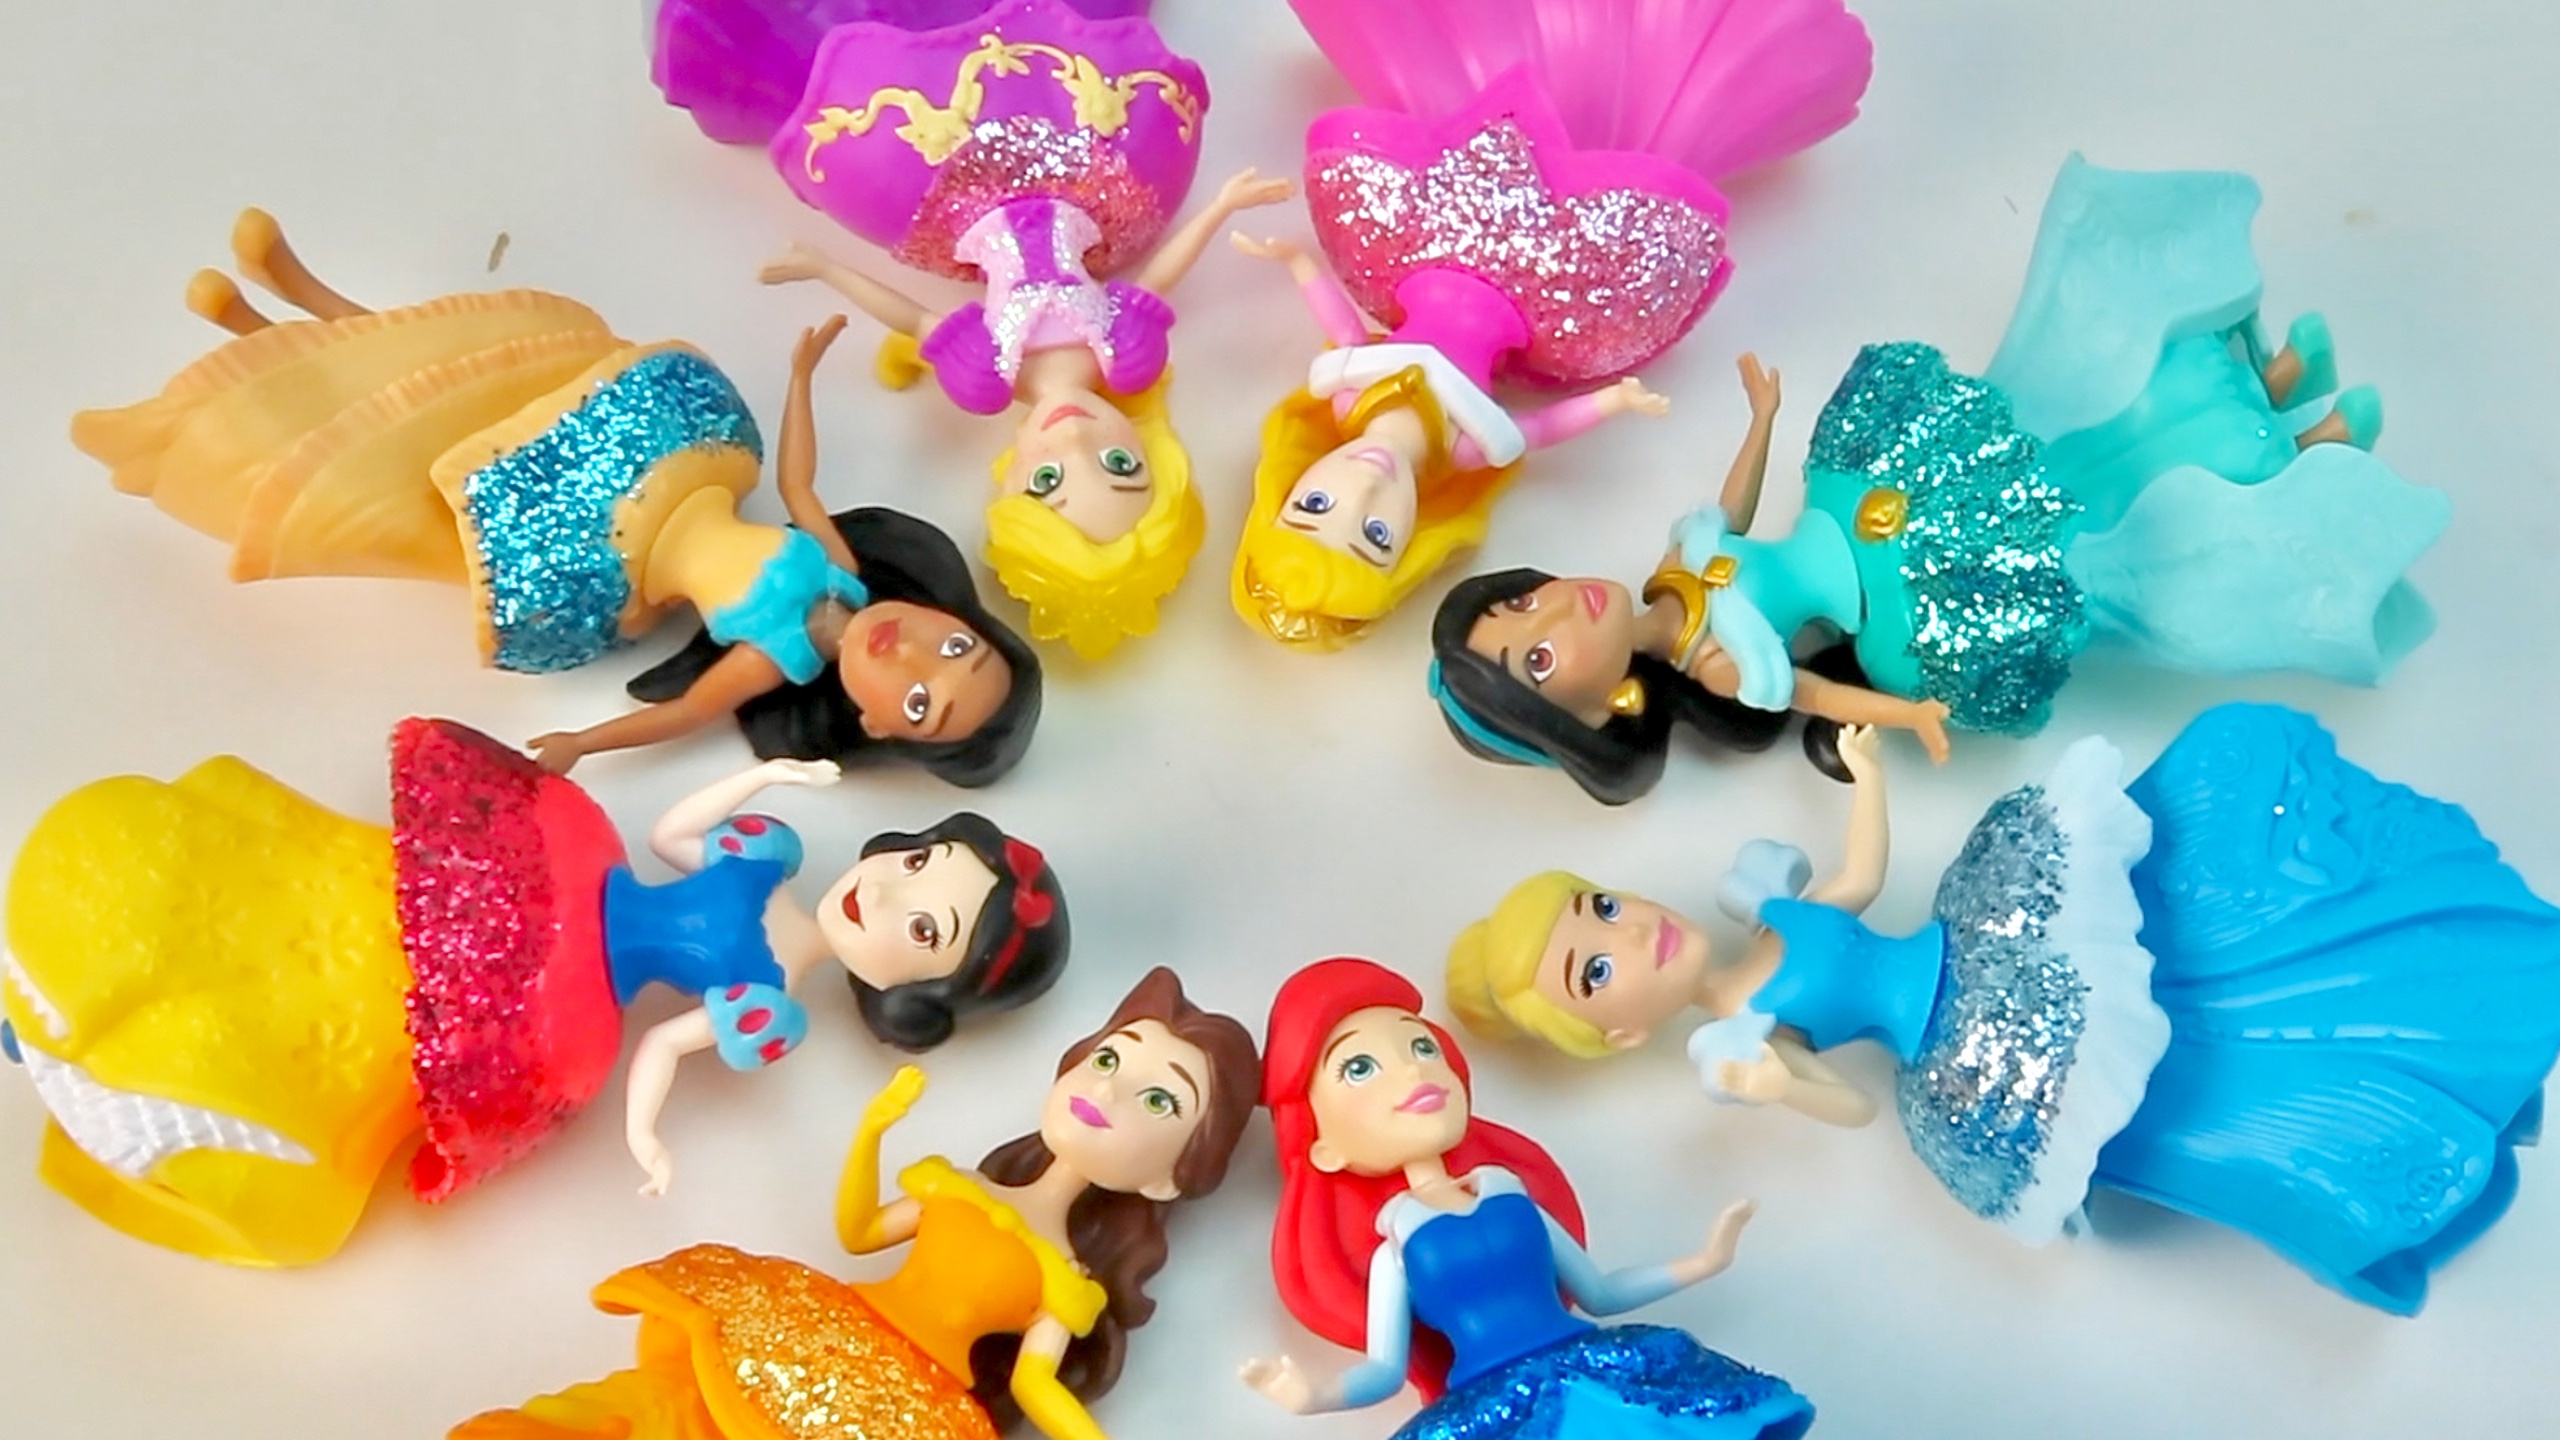 hasbro disney princess dolls 2019